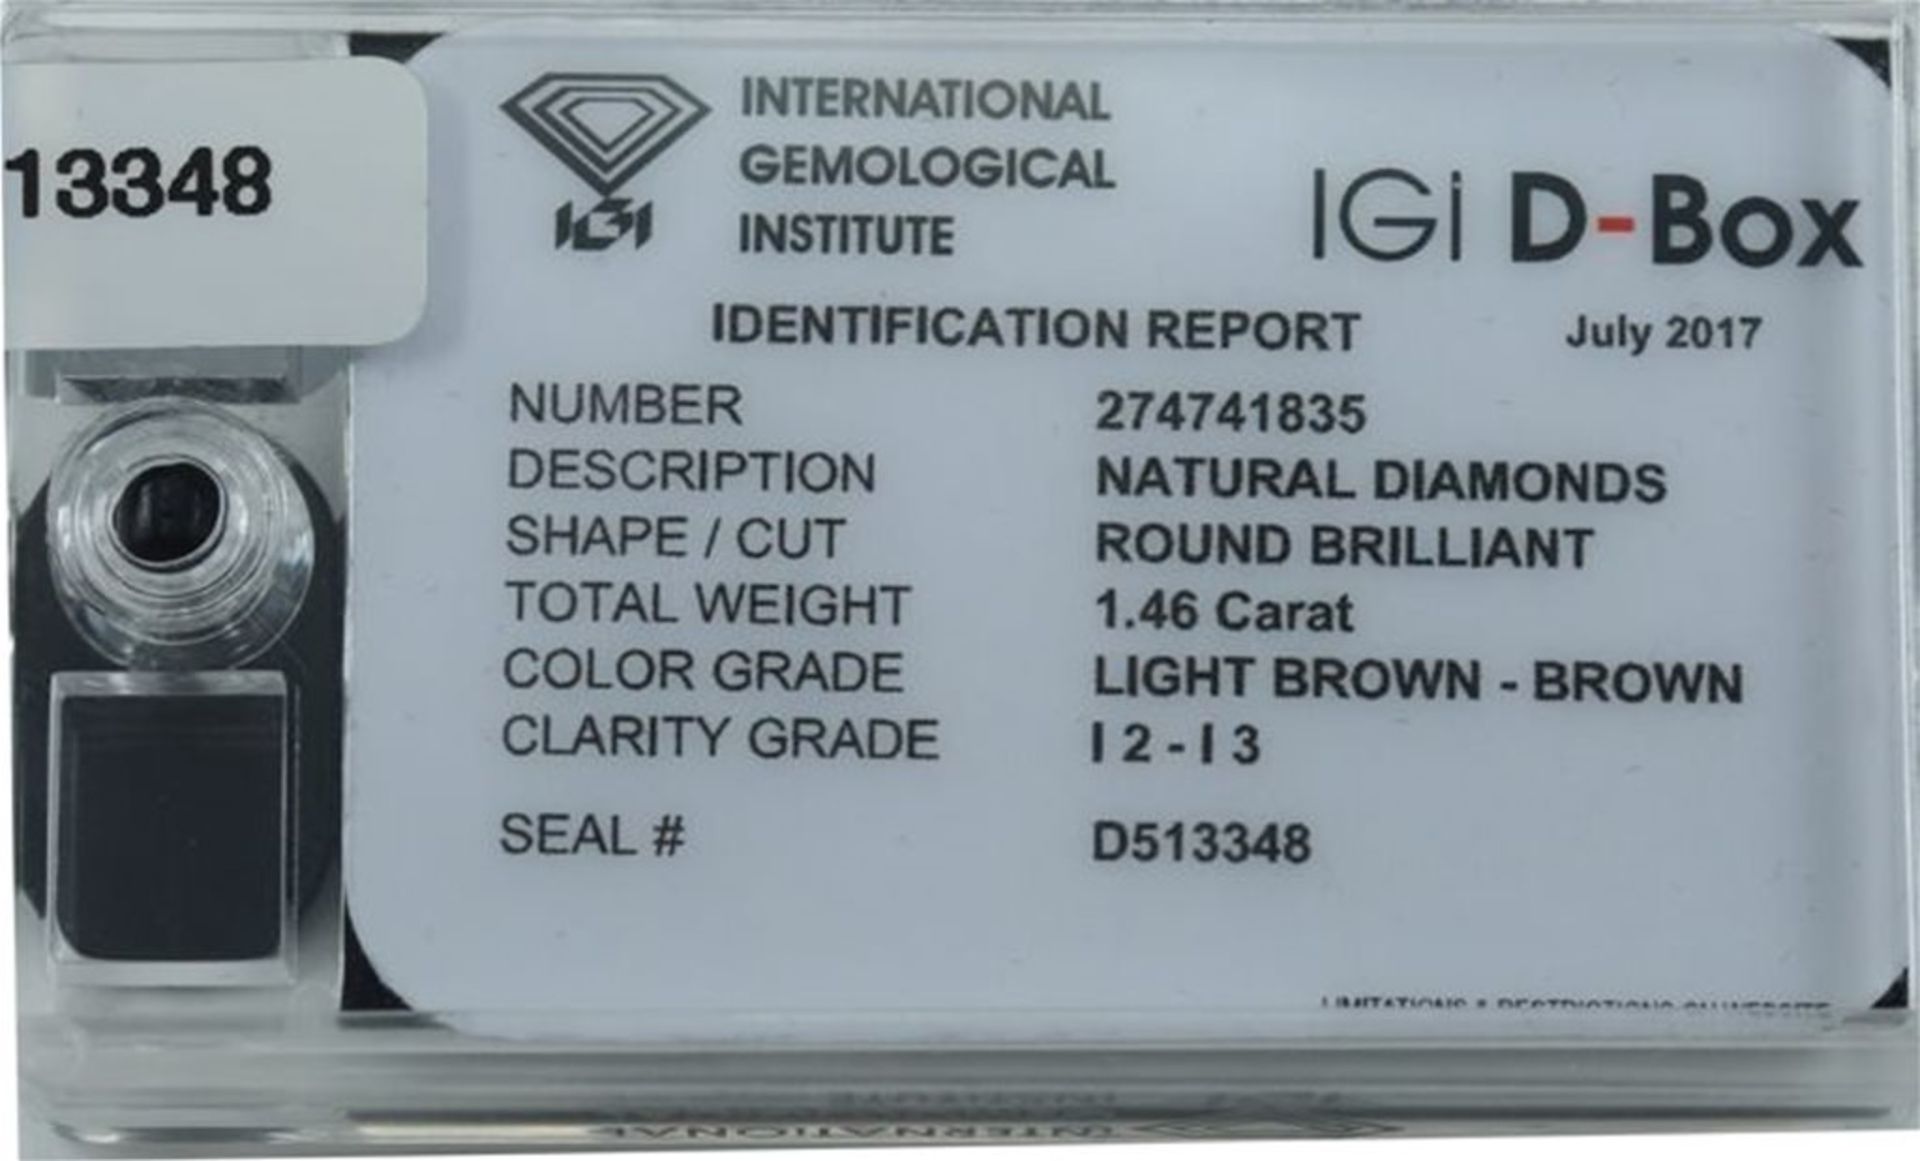 IGI Certified 1.46 ct. "Diamond D-Box" - Round Brilliant Natural Diamonds - Image 2 of 4